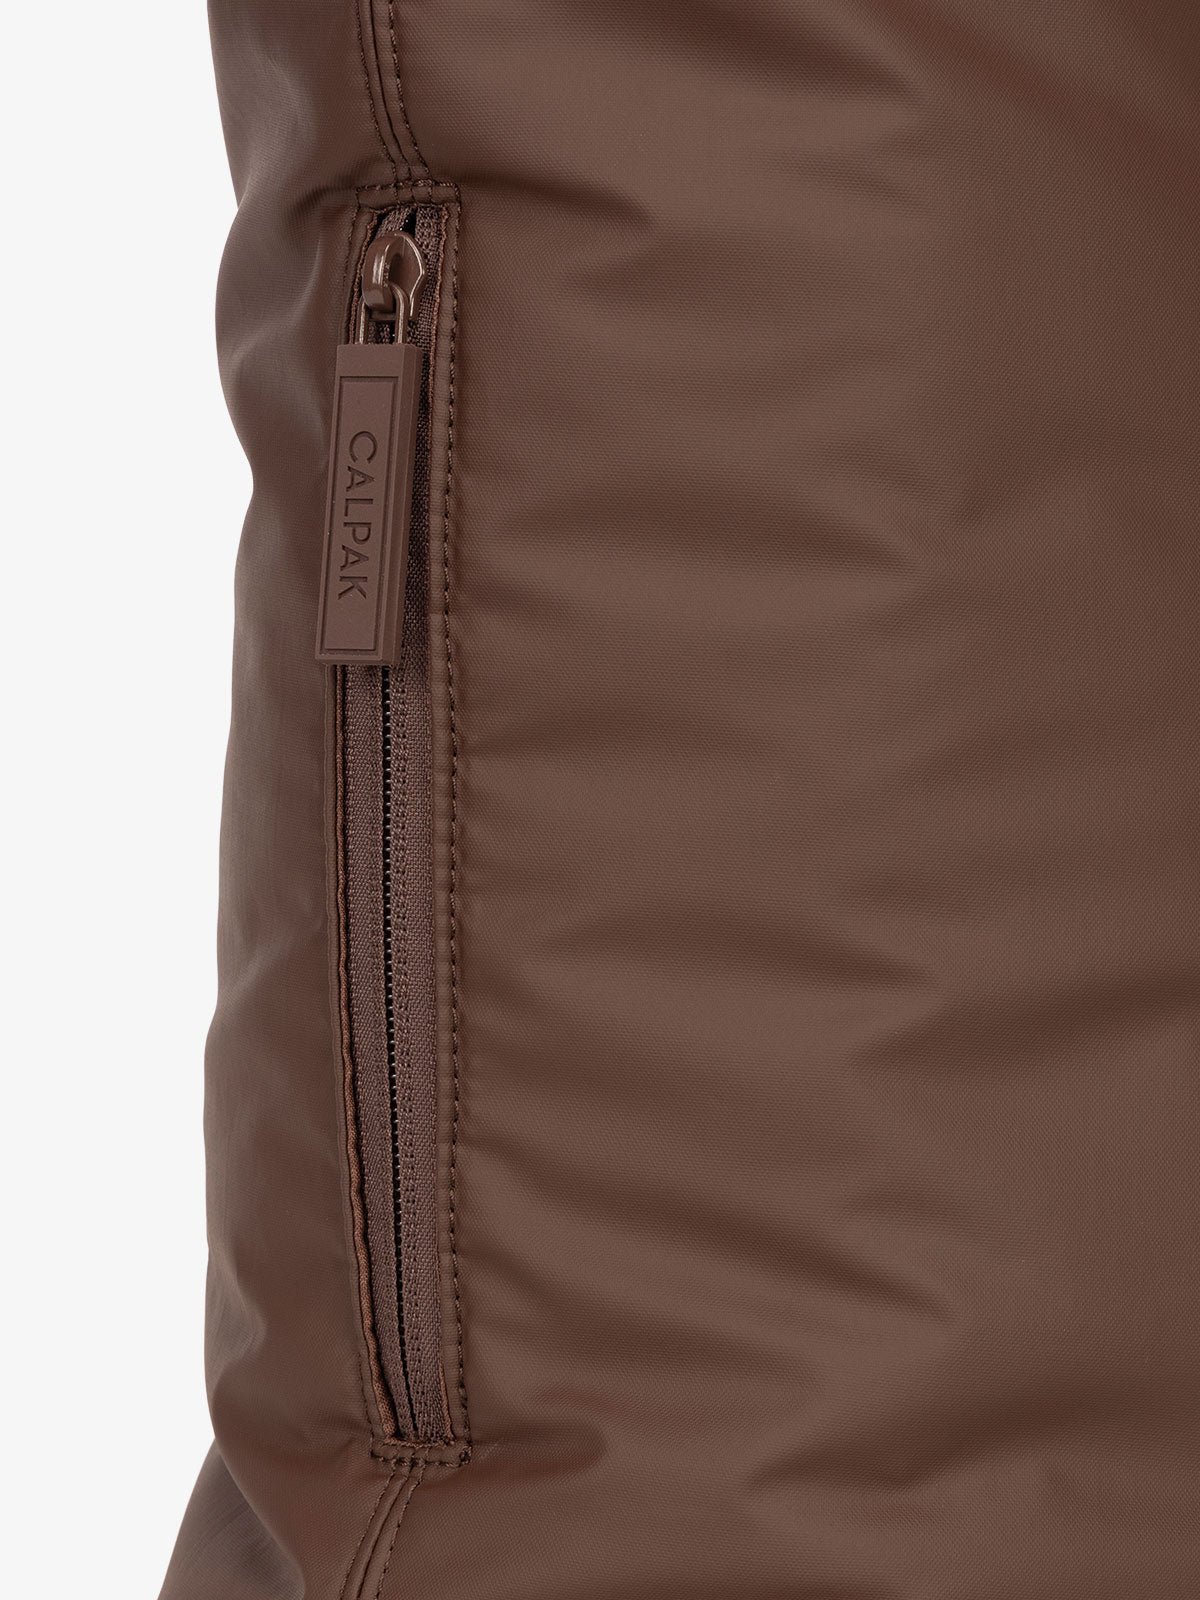 CALPAK Luka expandable laptop bag with hidden zippered pockets in dark brown